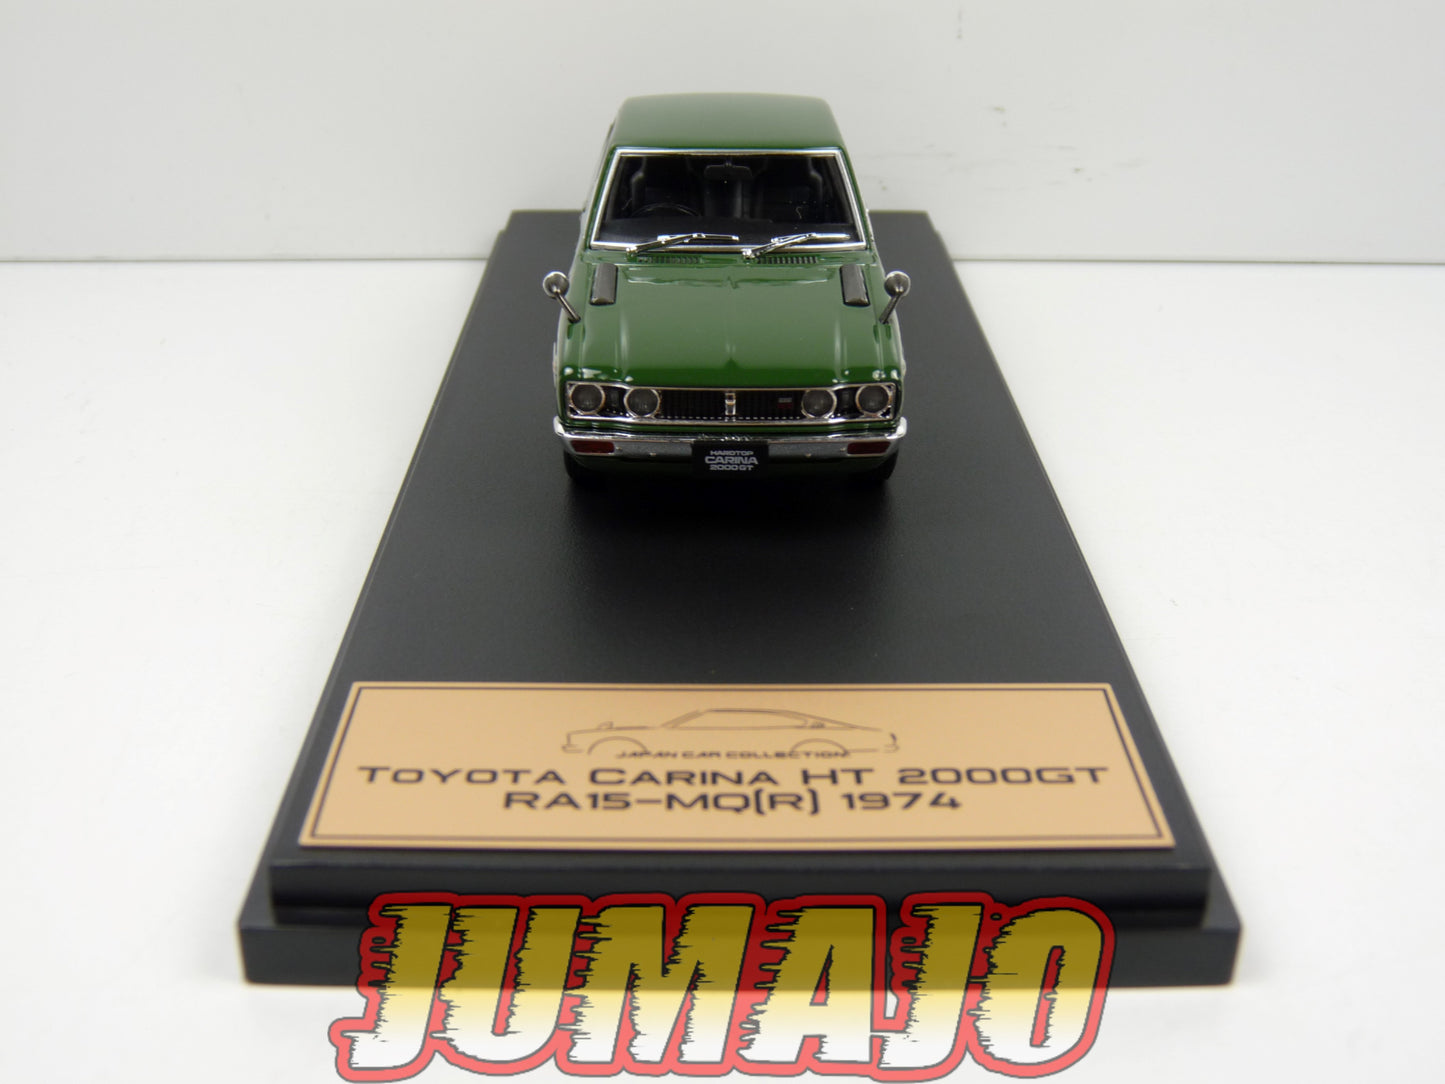 JPL32 1/43 HACHETTE Japon : Toyota Carina HT 2000GT RA15-MQ(R) 1974